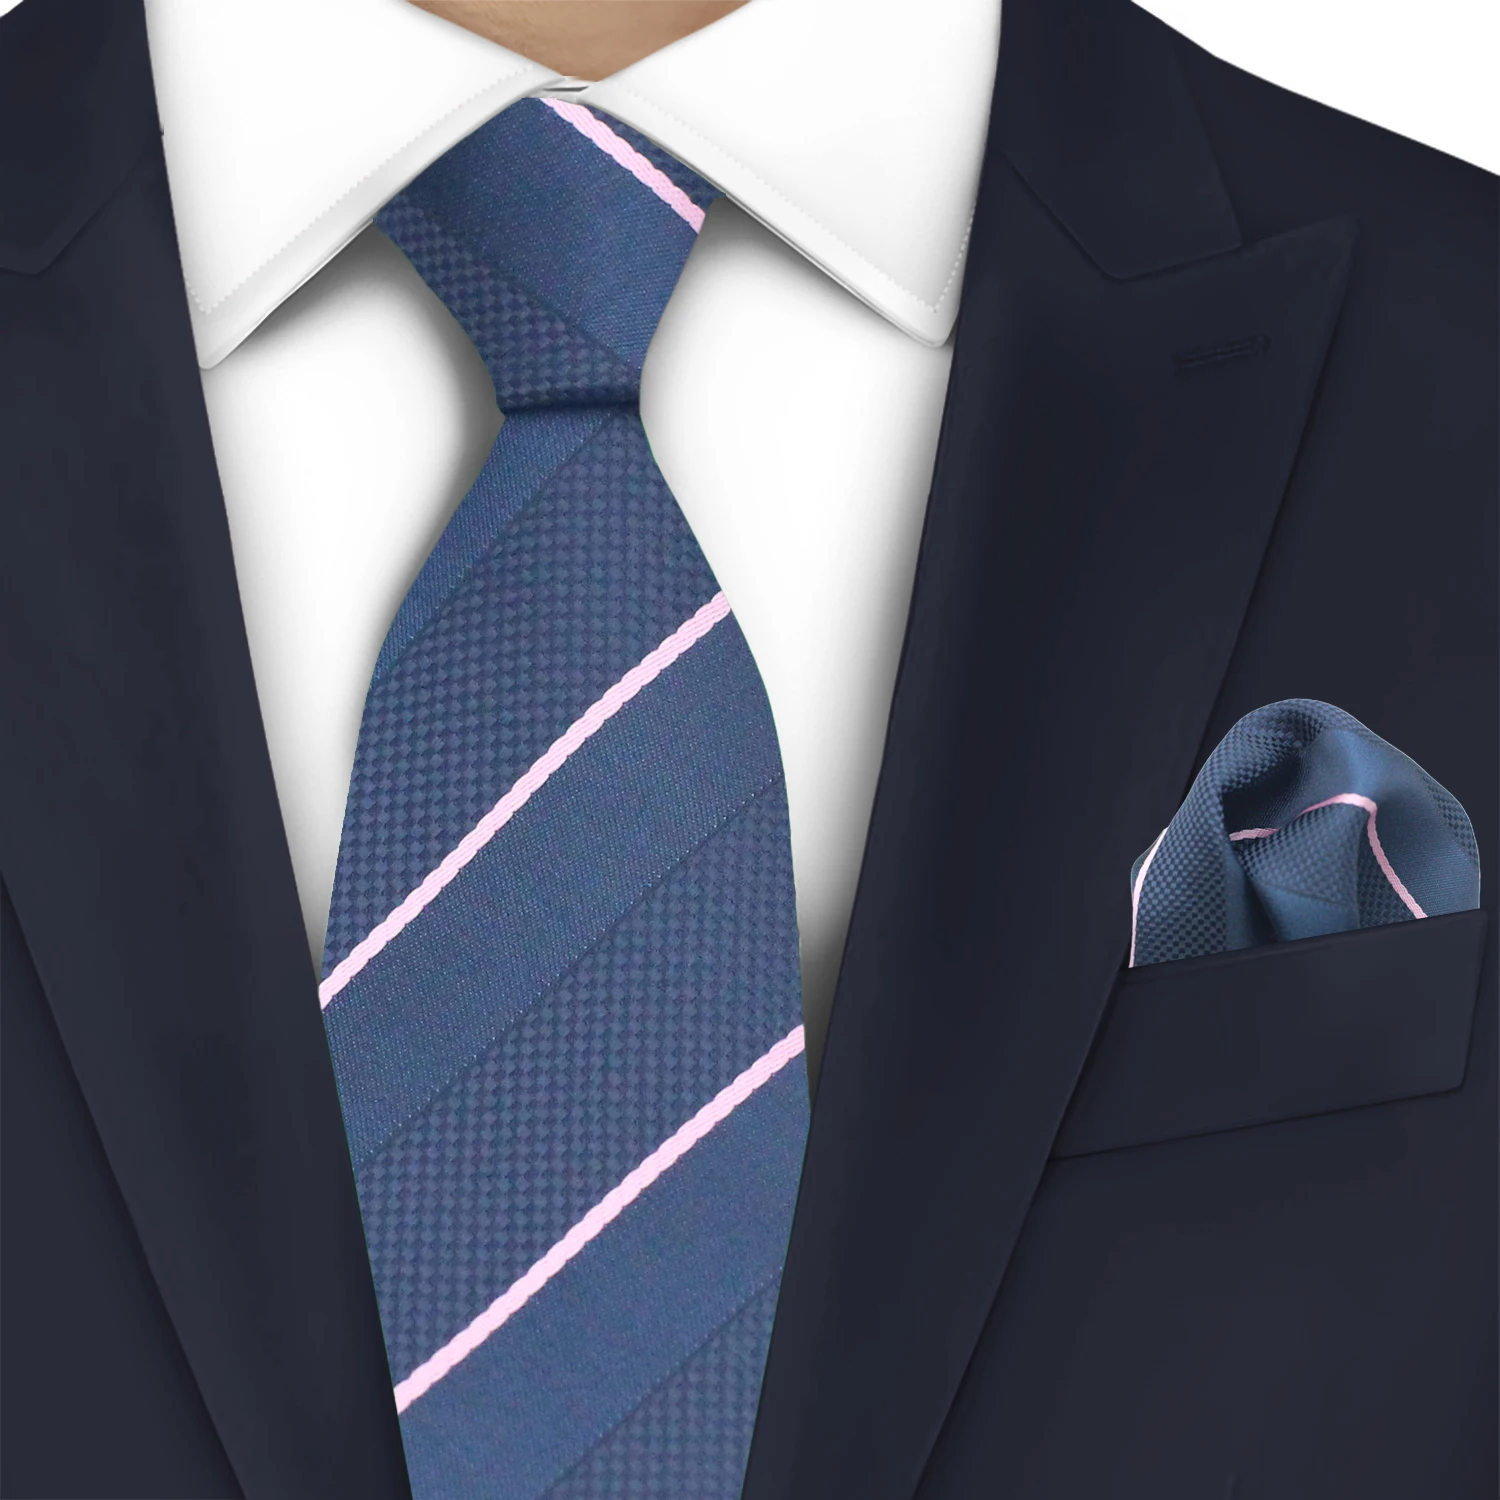 

LYL 5CM Blue Pinstripe Fashion Tie Sophisticated Men's Necktie Set Classy Paisley Design With Handkerchief for Elegant Attire